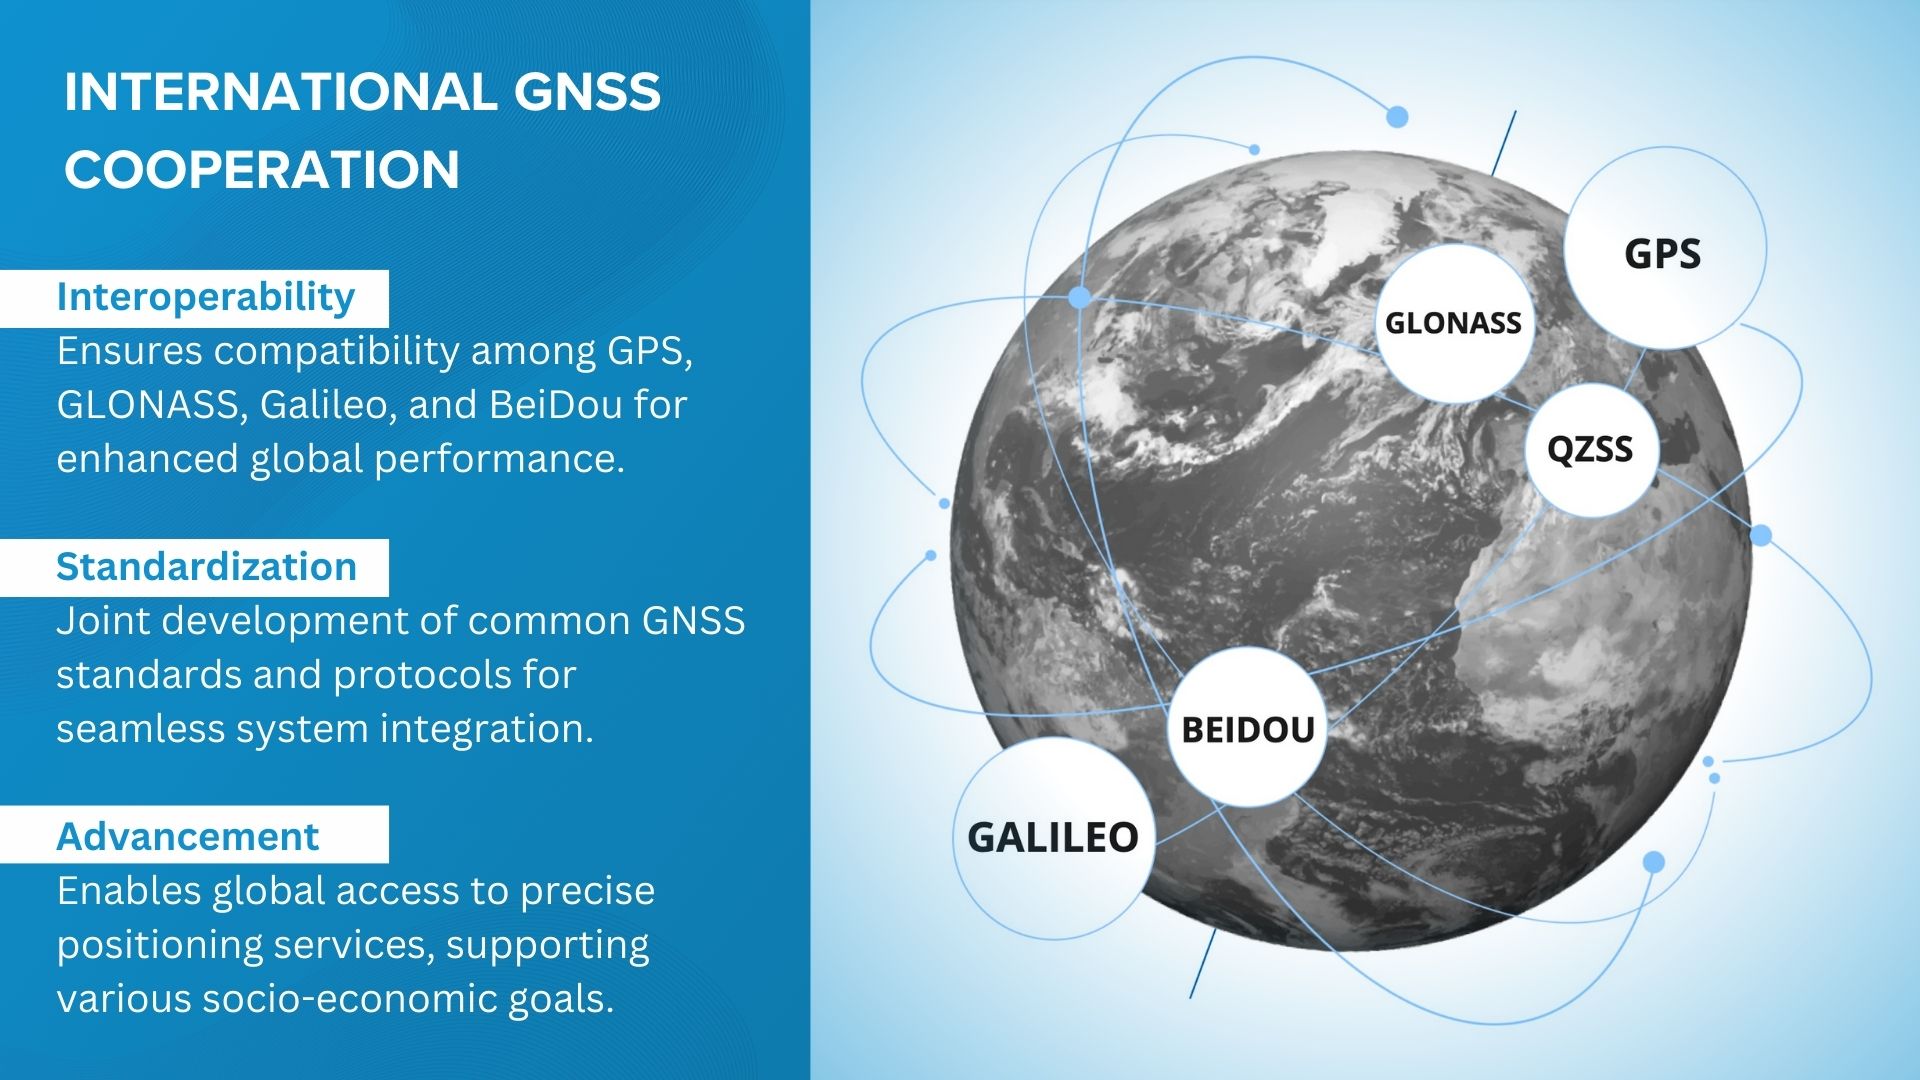 International GNSS cooperation